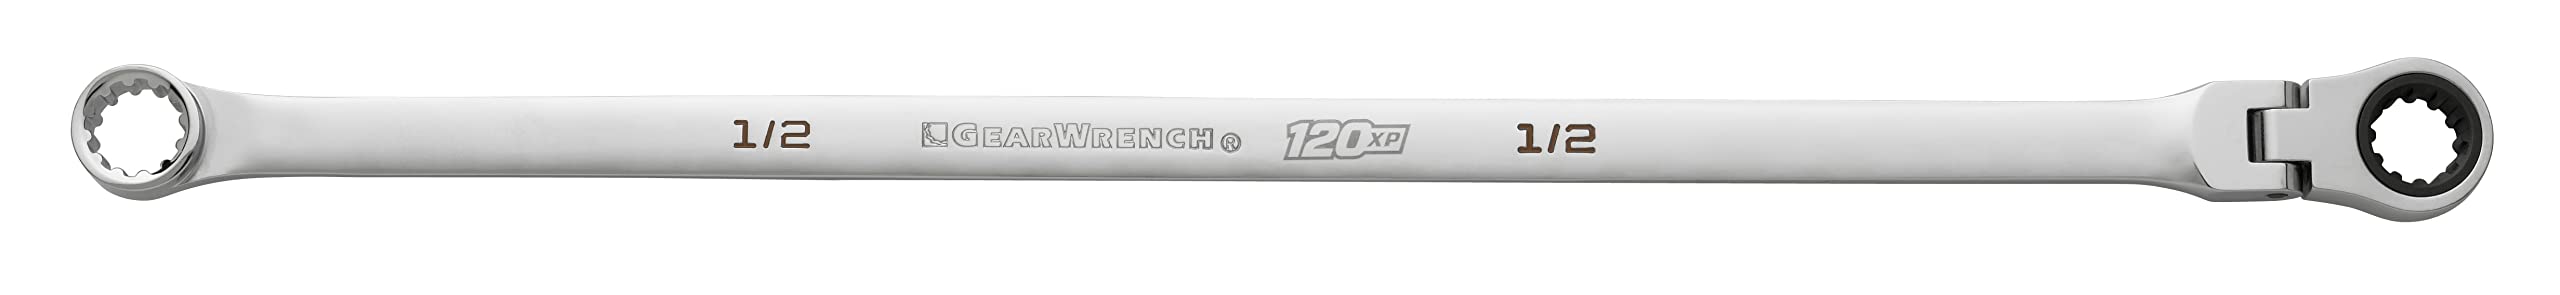 GearWrench 10 Pc. 120XP Universal Spline XL Flex Head GearBox Ratcheting SAE Wrench Set - 86142